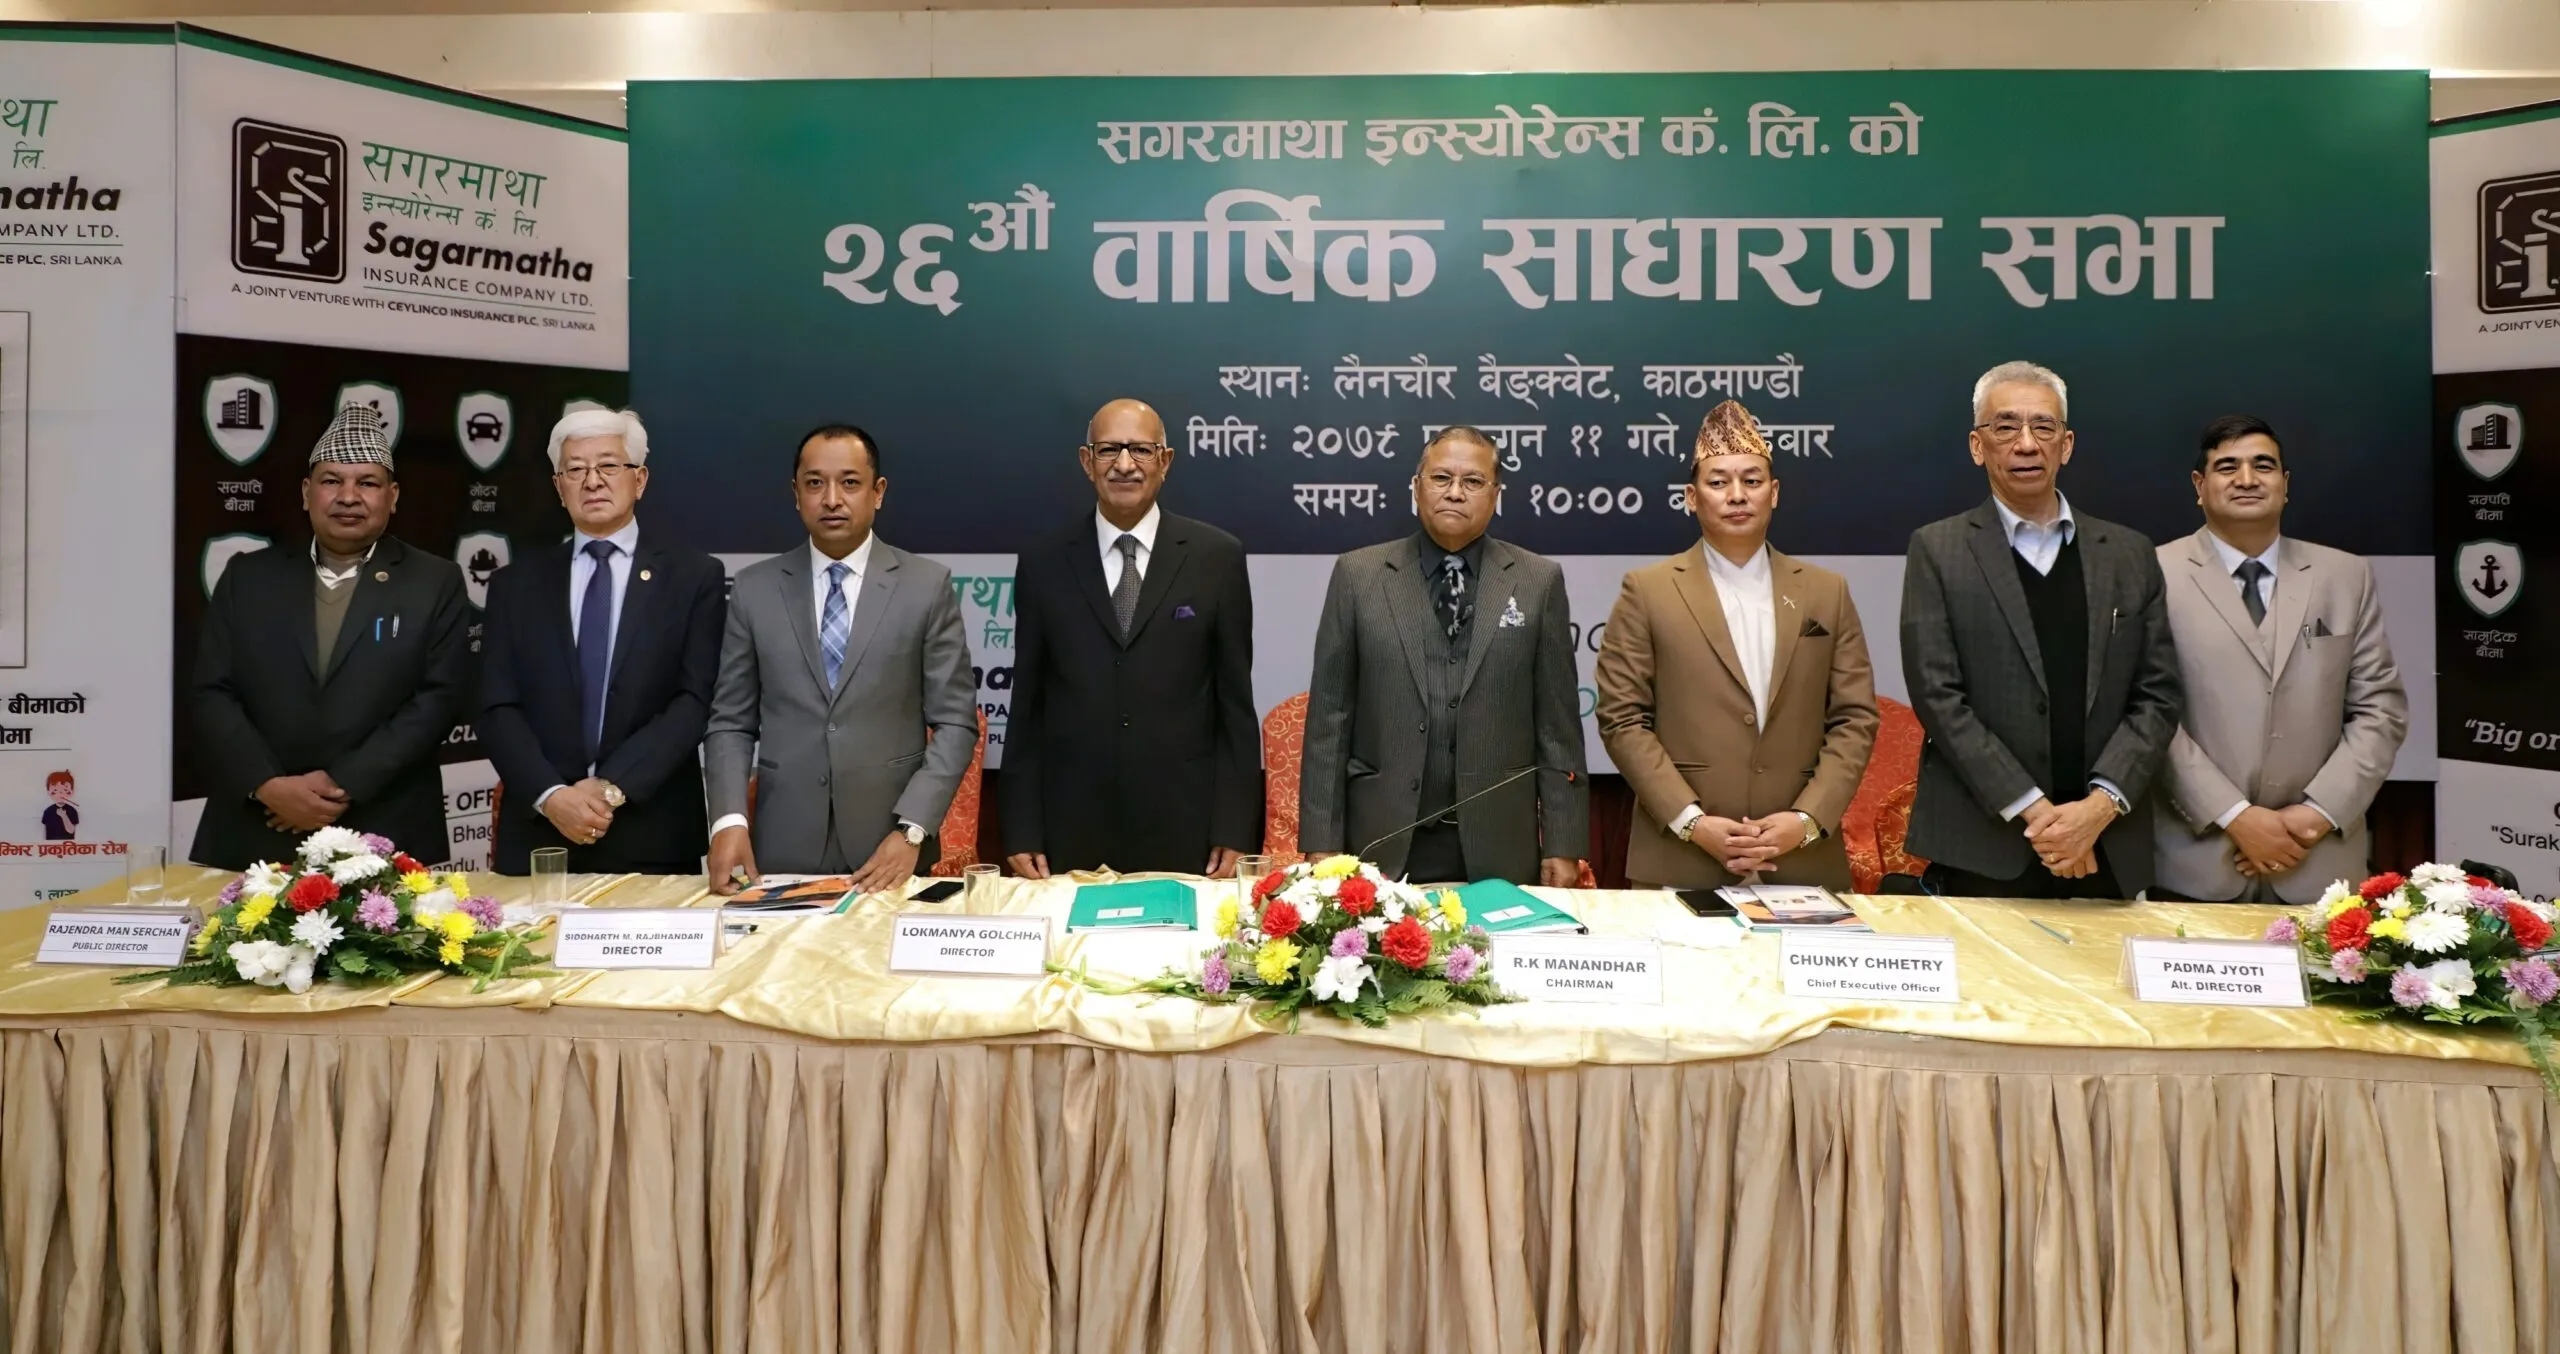 Sagarmatha Insurance’s AGM Endorsed the Agenda for Merger with Lumbini General